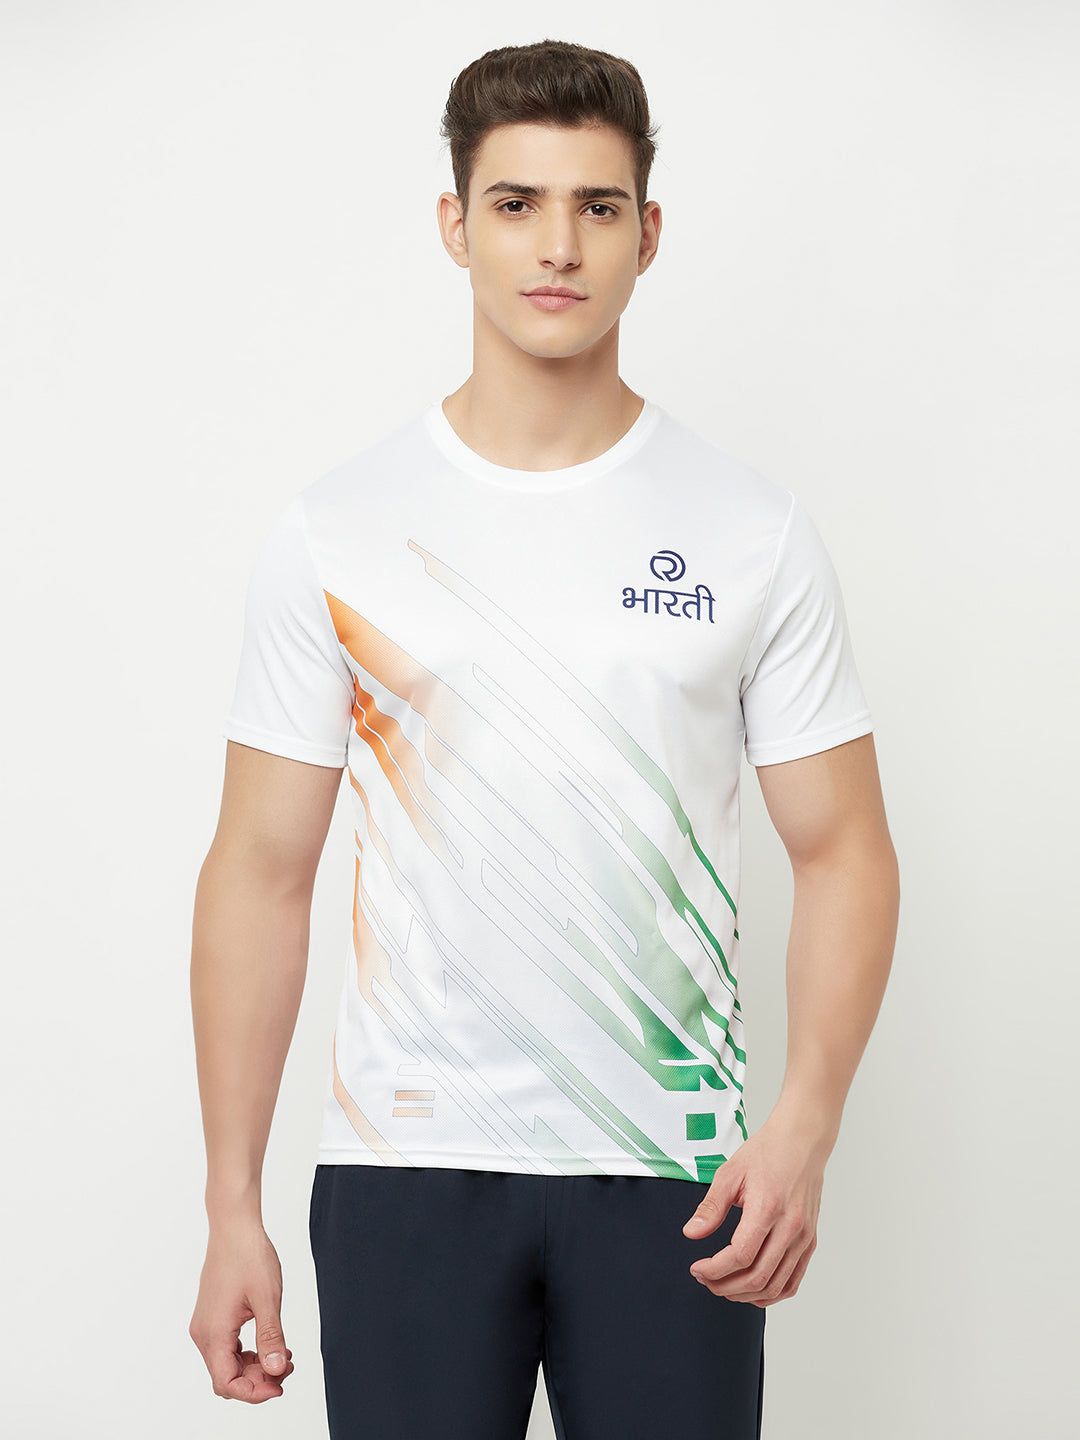 Men's reflective dryfit tshirt with flow graphics